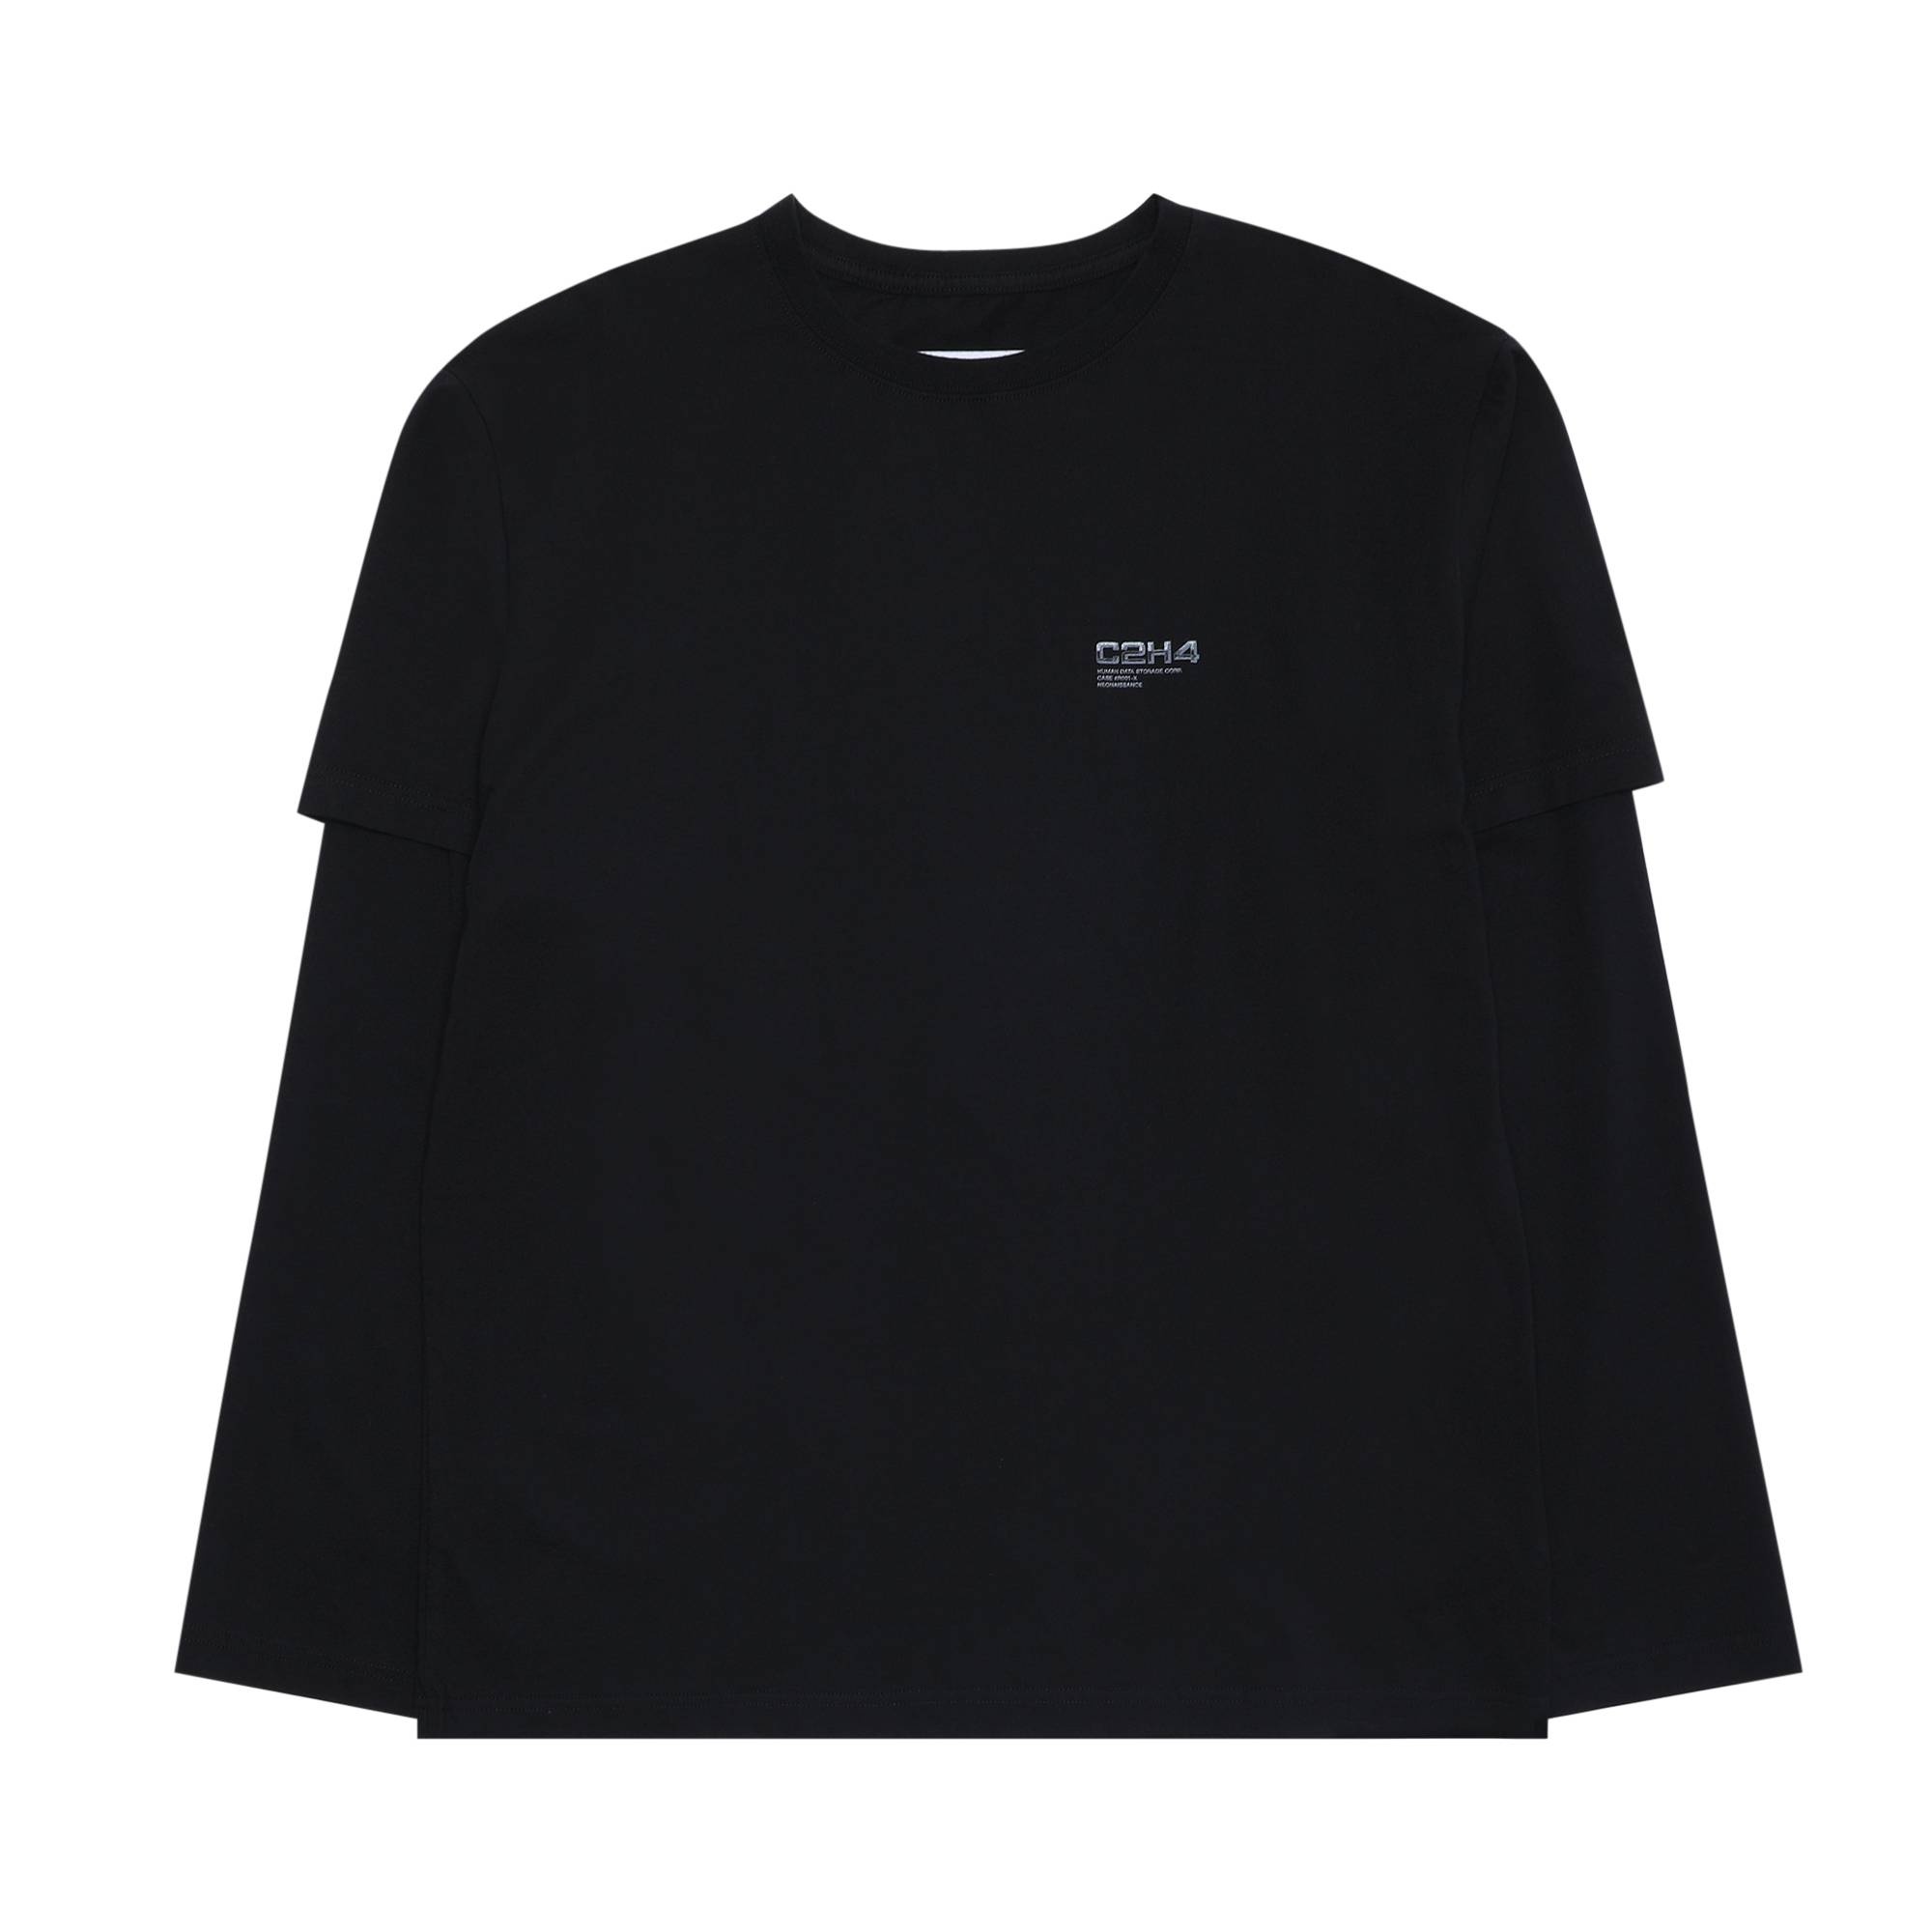 C2H4 Double Layered Long-Sleeve T-shirt 'Black' - 1